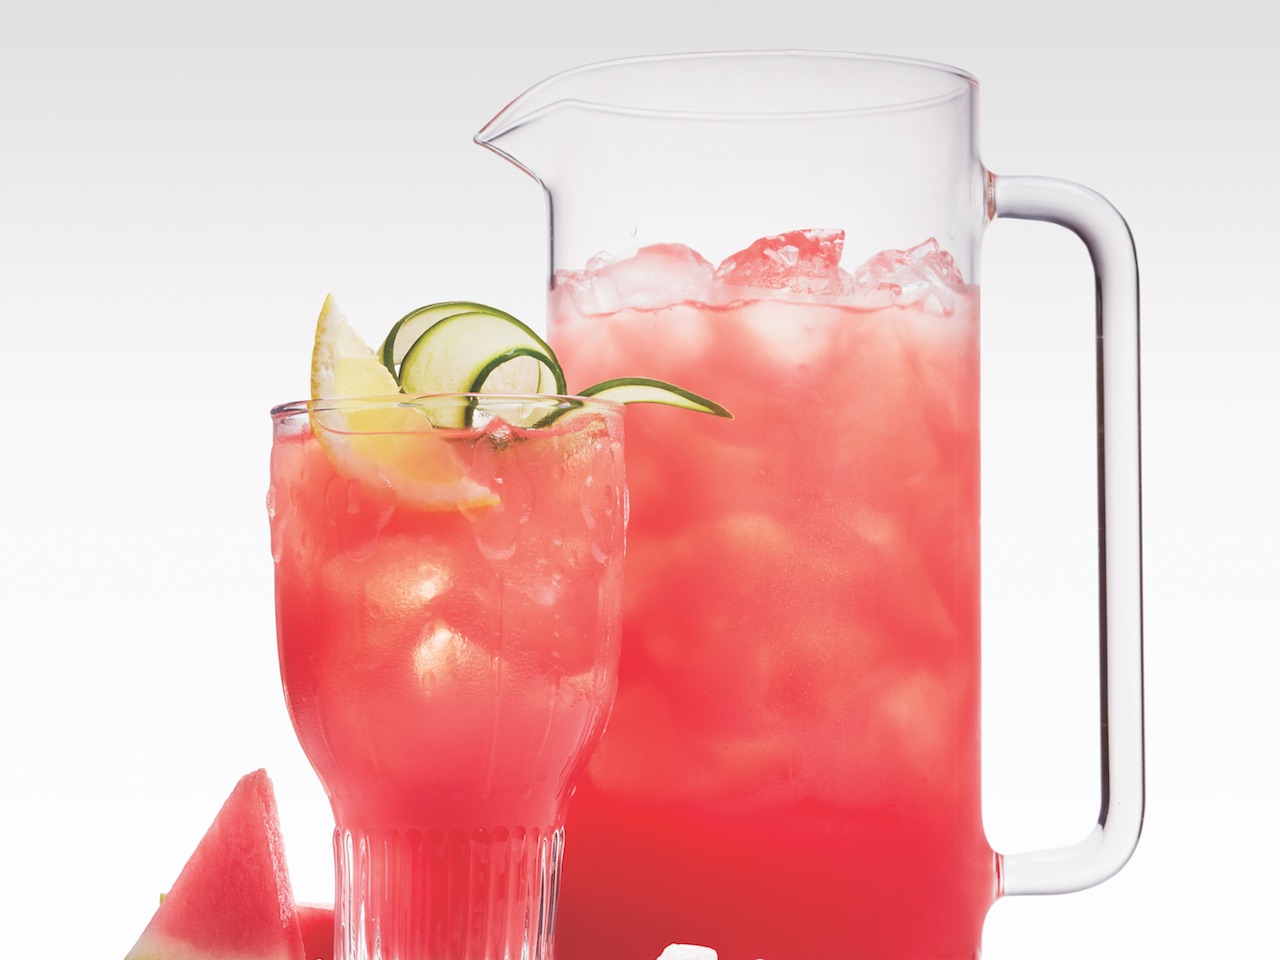 How to make lemonade: watermelon pink lemonade pitcher